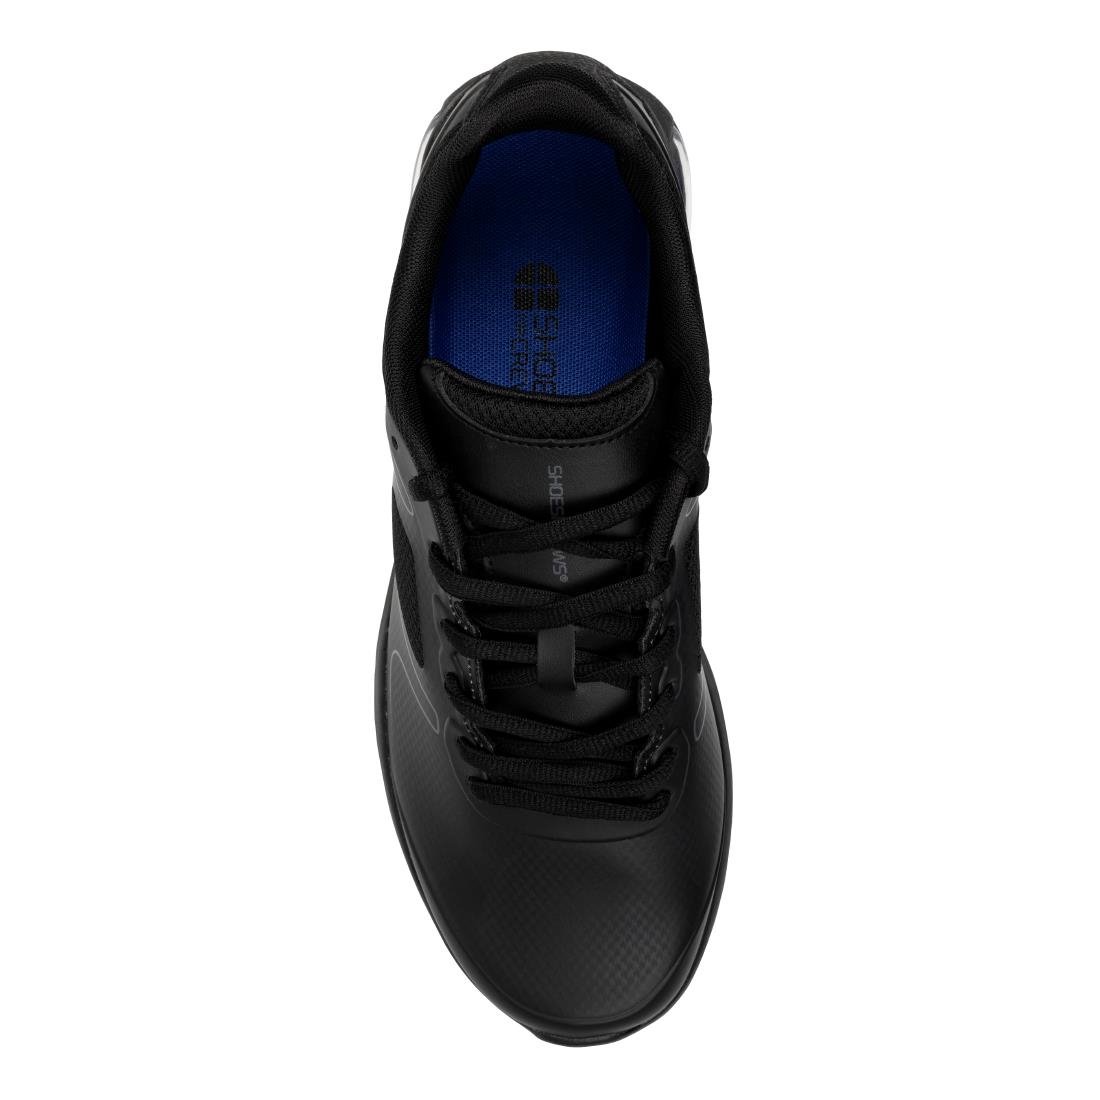 BB586-50 Shoes for Crews Men's Evolution Trainers Black Size 50